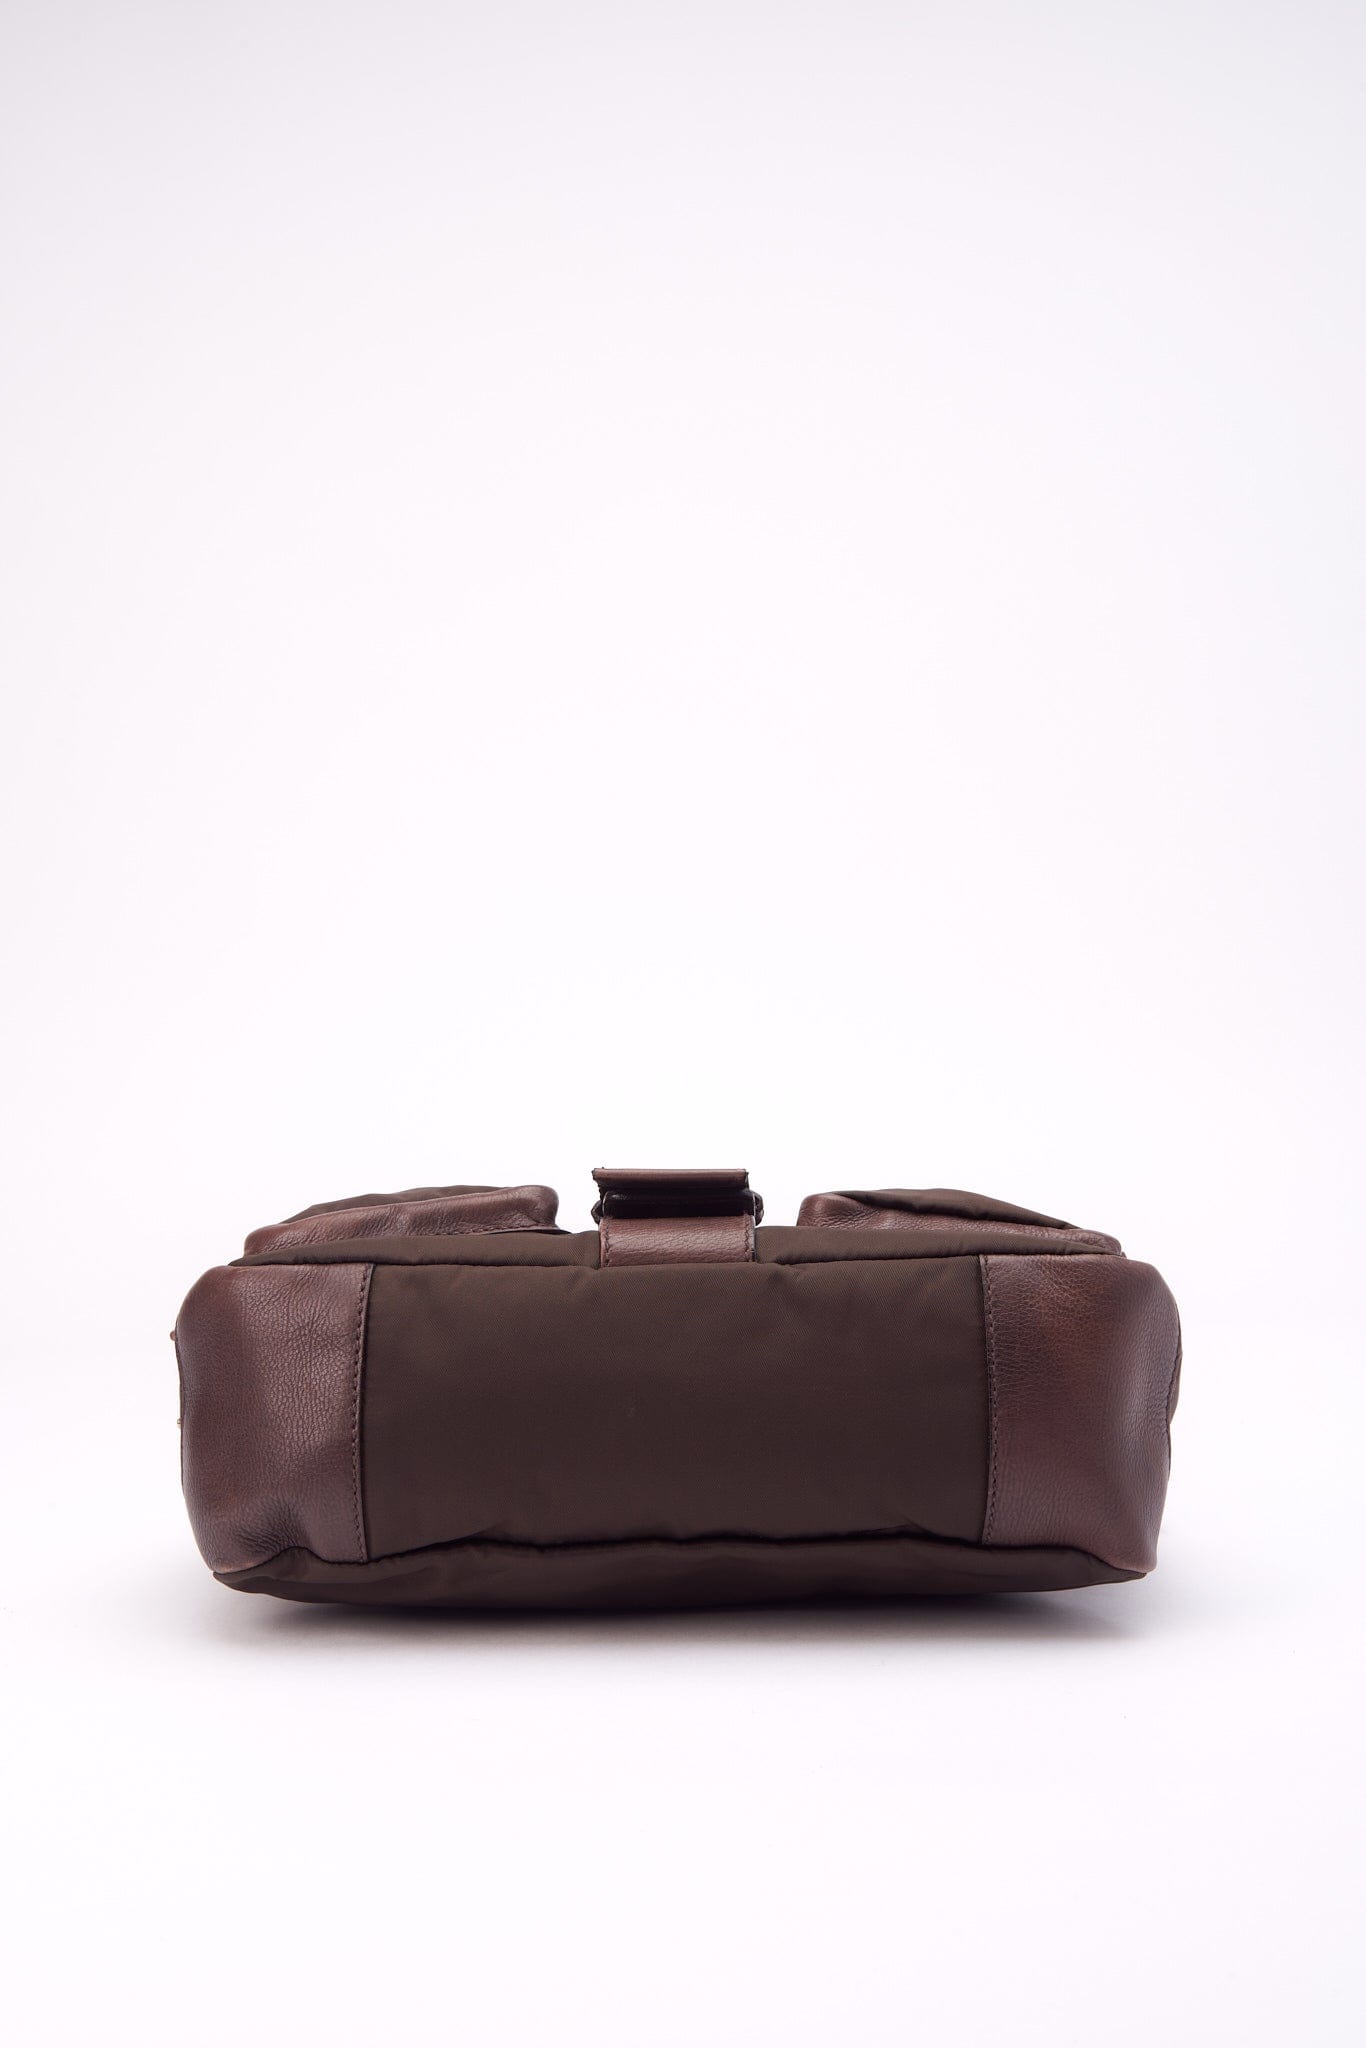 Vintage Prada Brown Leather Bag with Webbing Strap